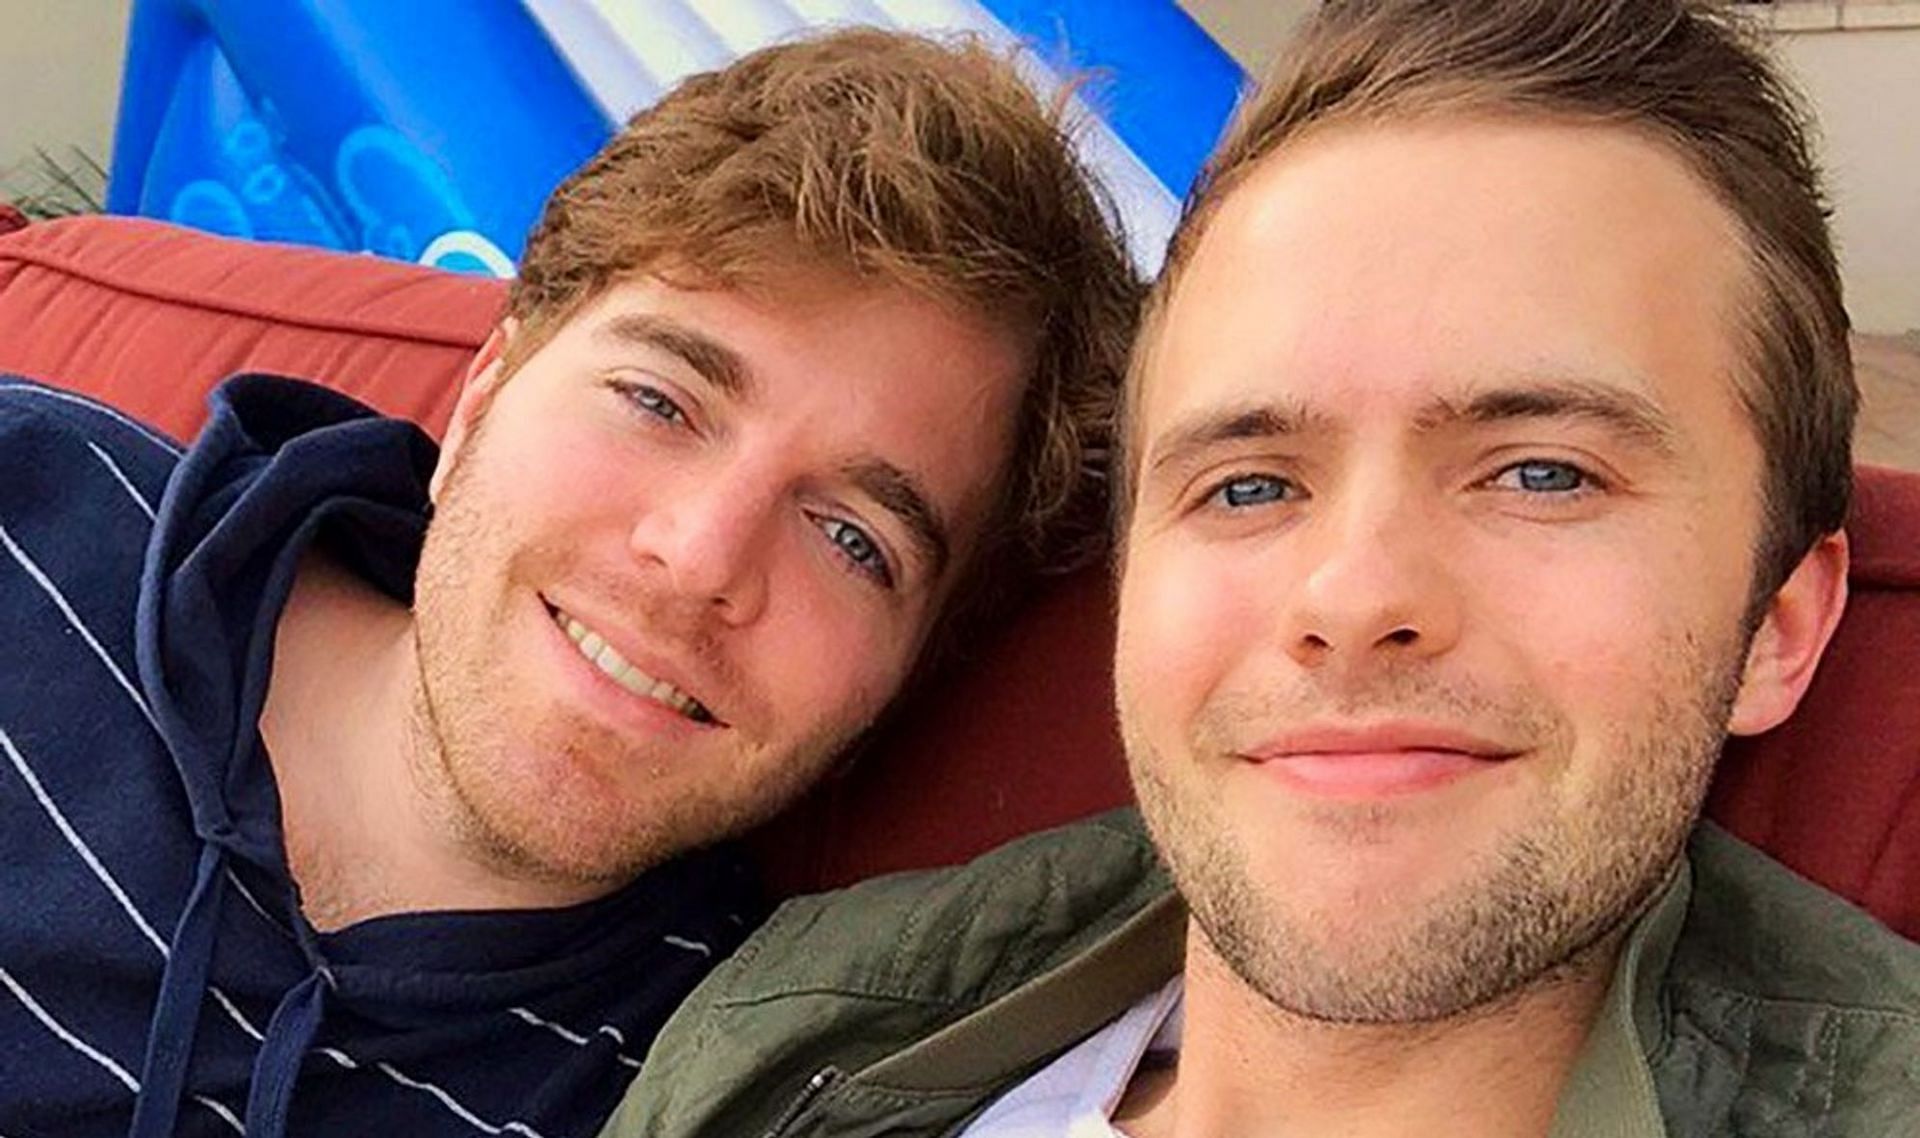 Shane Dawson and Ryland Adams express interest in becoming parents, leaving followers concerned (Image via Instagram/rylandadams)